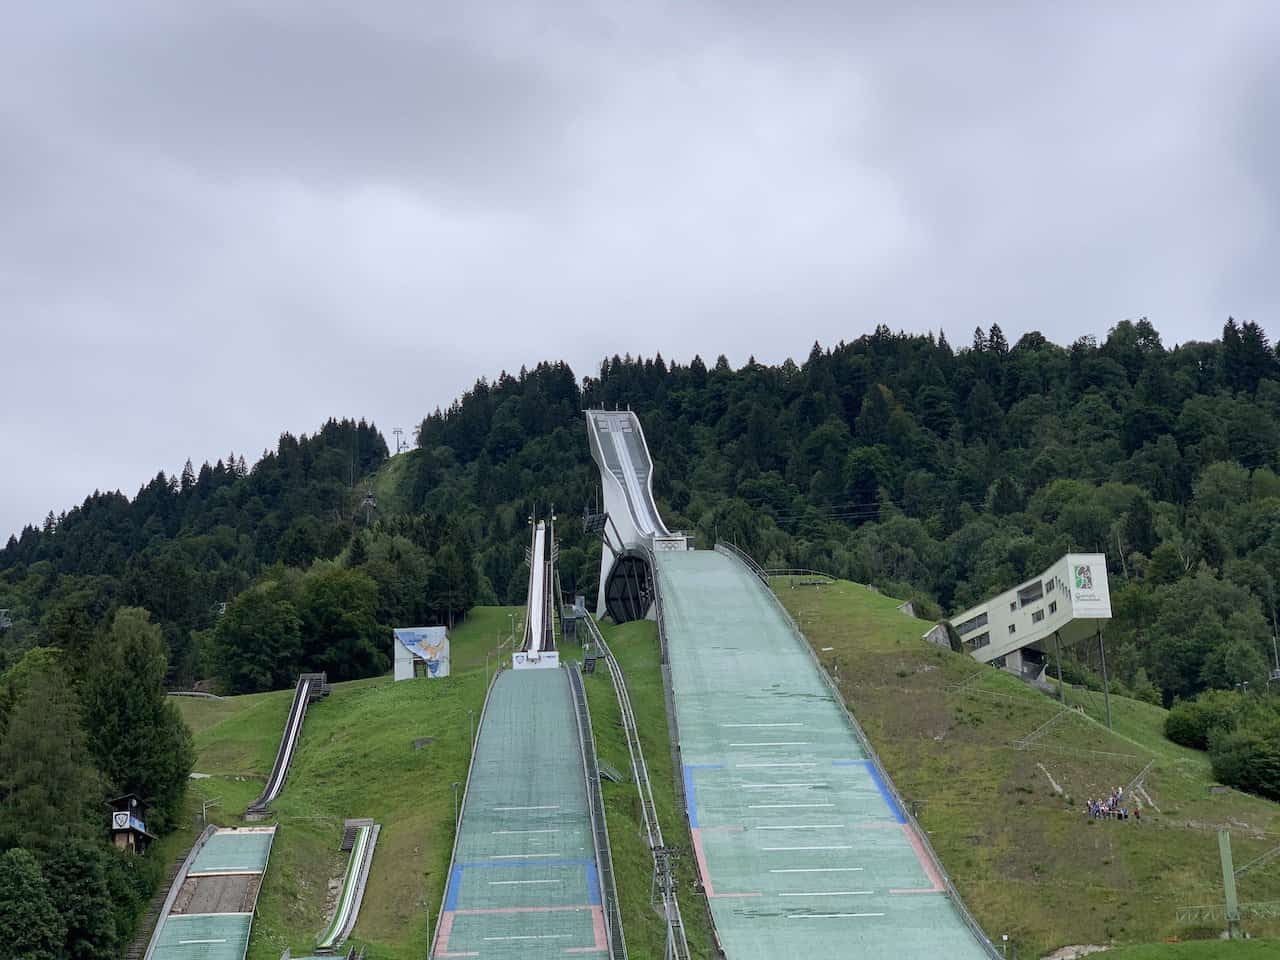 Olympic Ski Jump Garmisch Partenkirchen